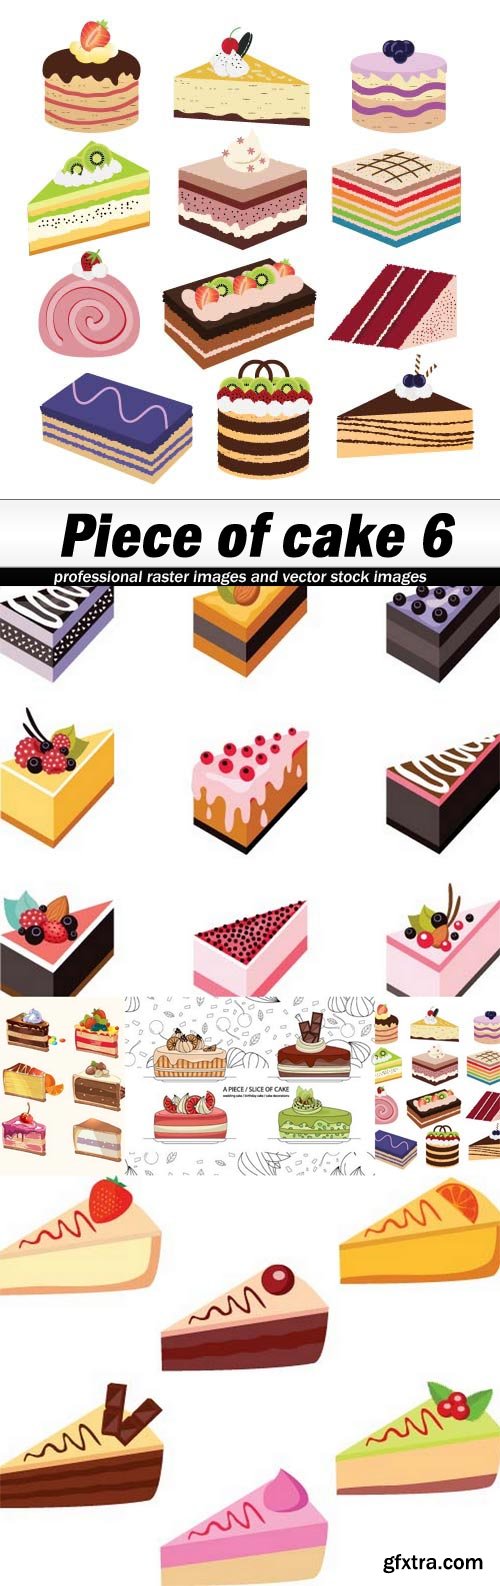 Piece of cake 6